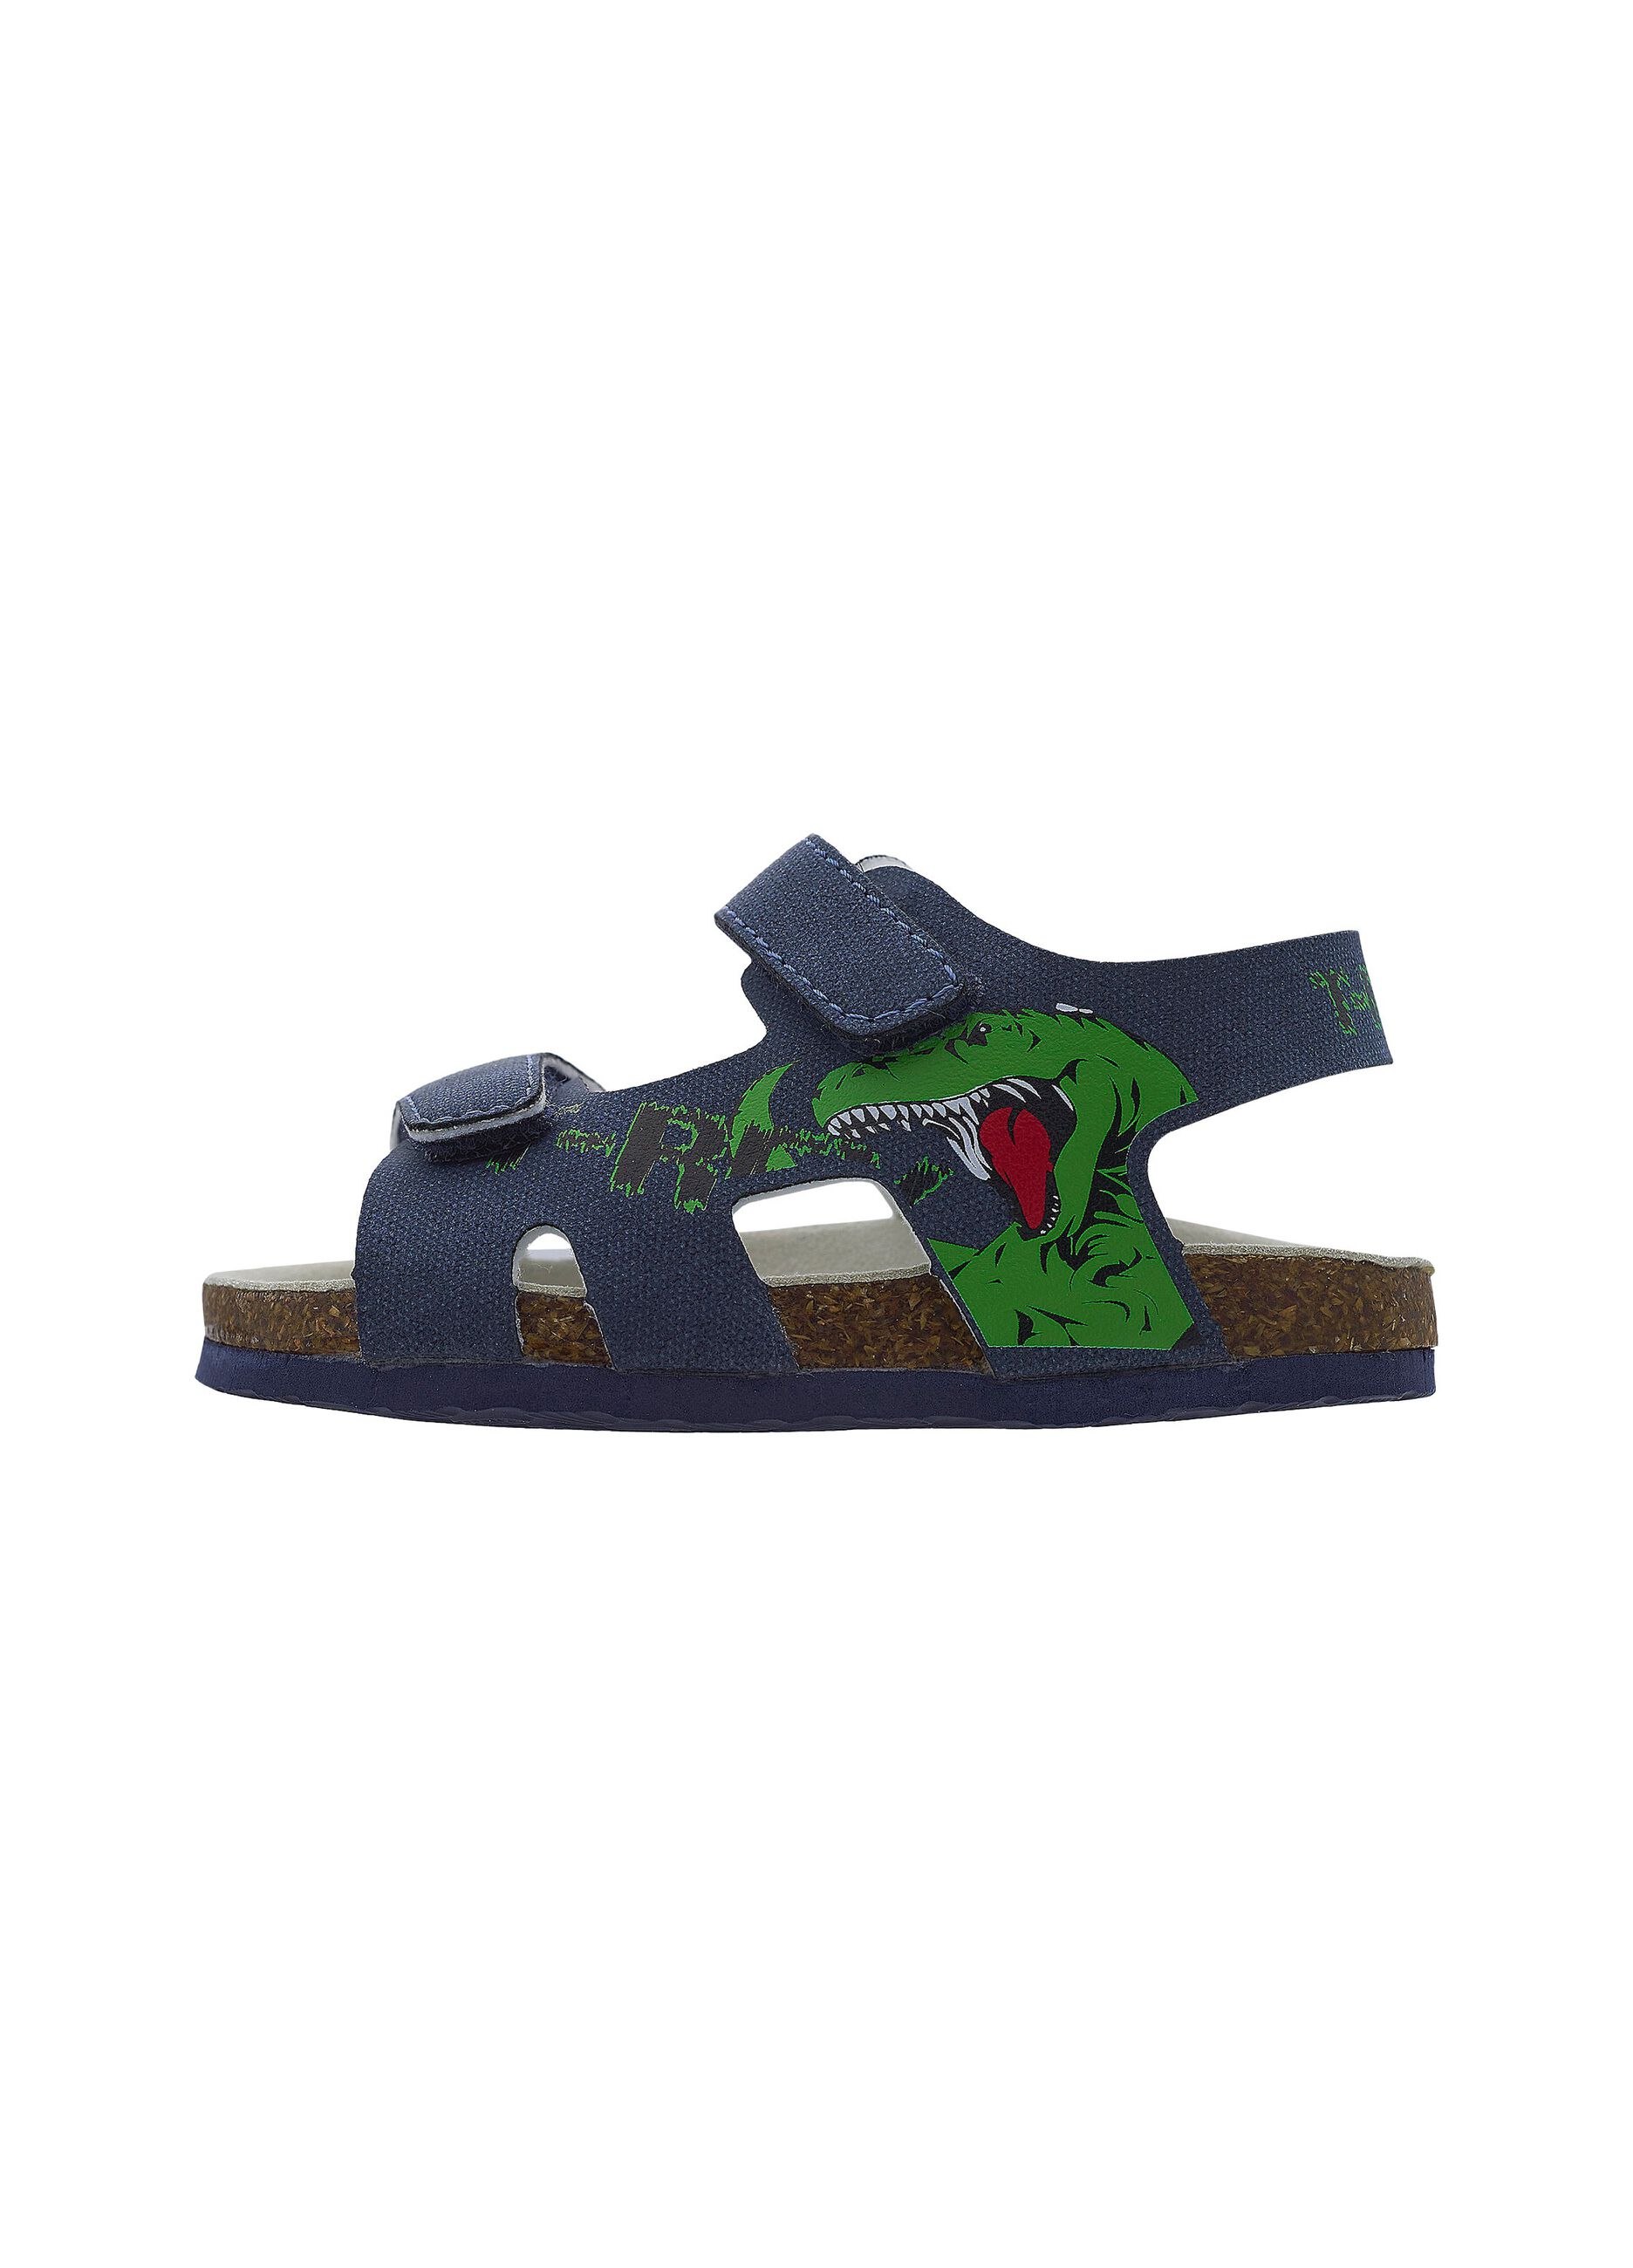 Francisco sandals with dinosaur print